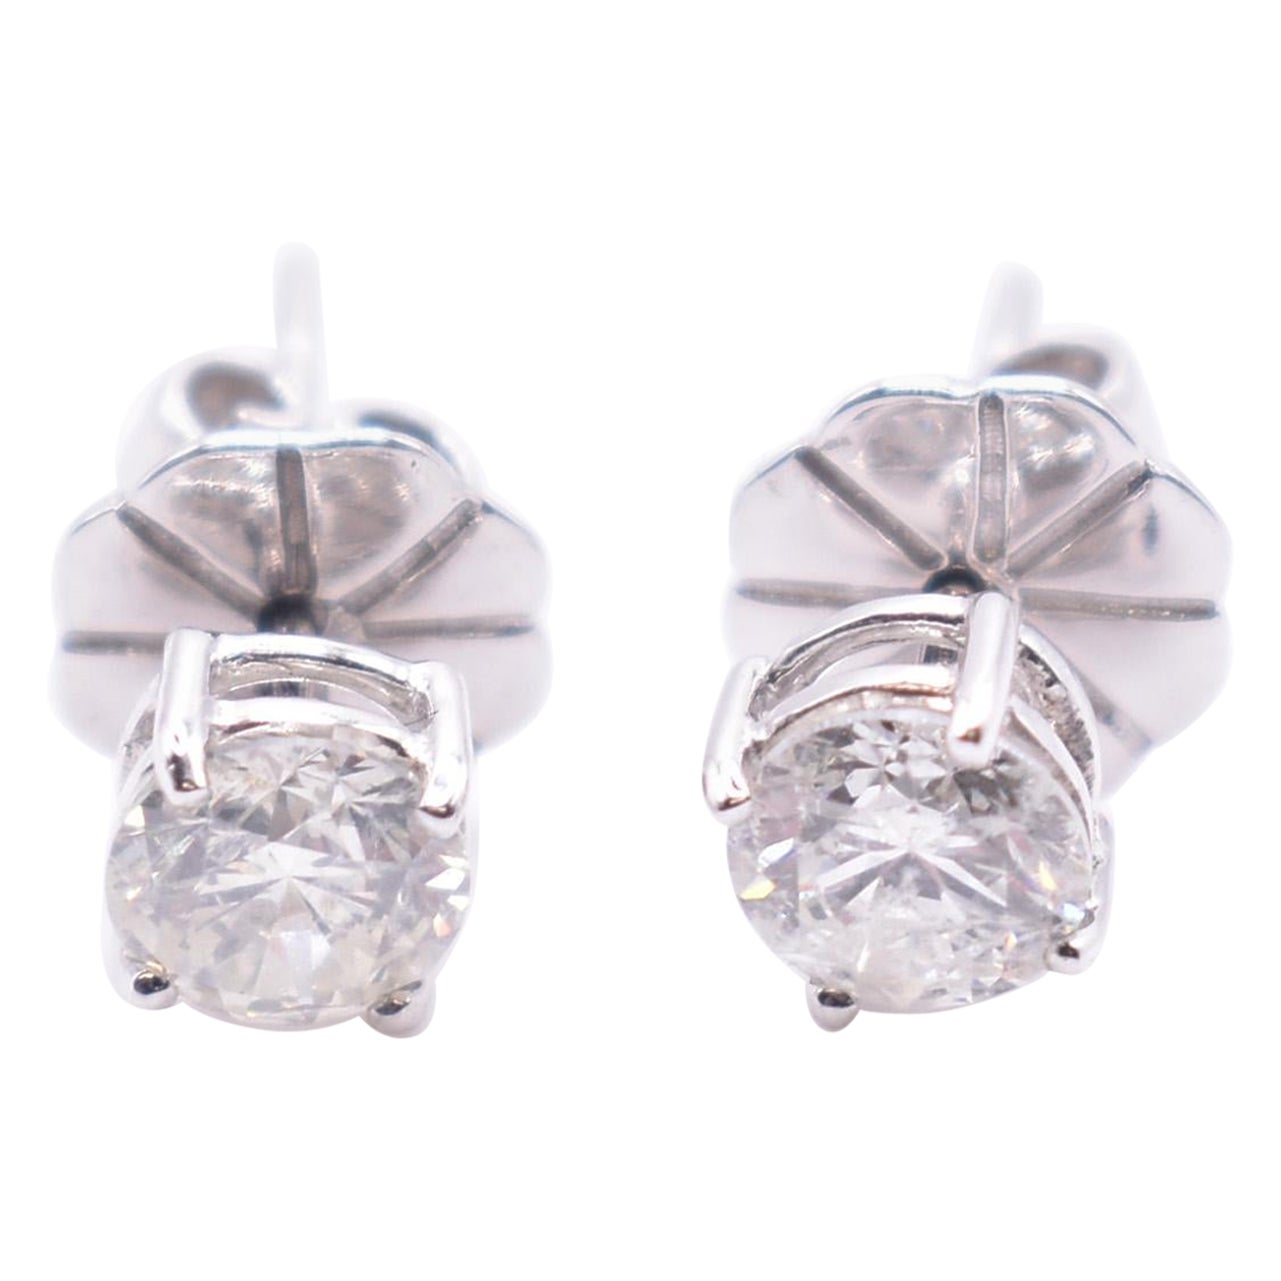 Pair of 18K White Gold 1.23ct Diamond Stud Earrings For Sale